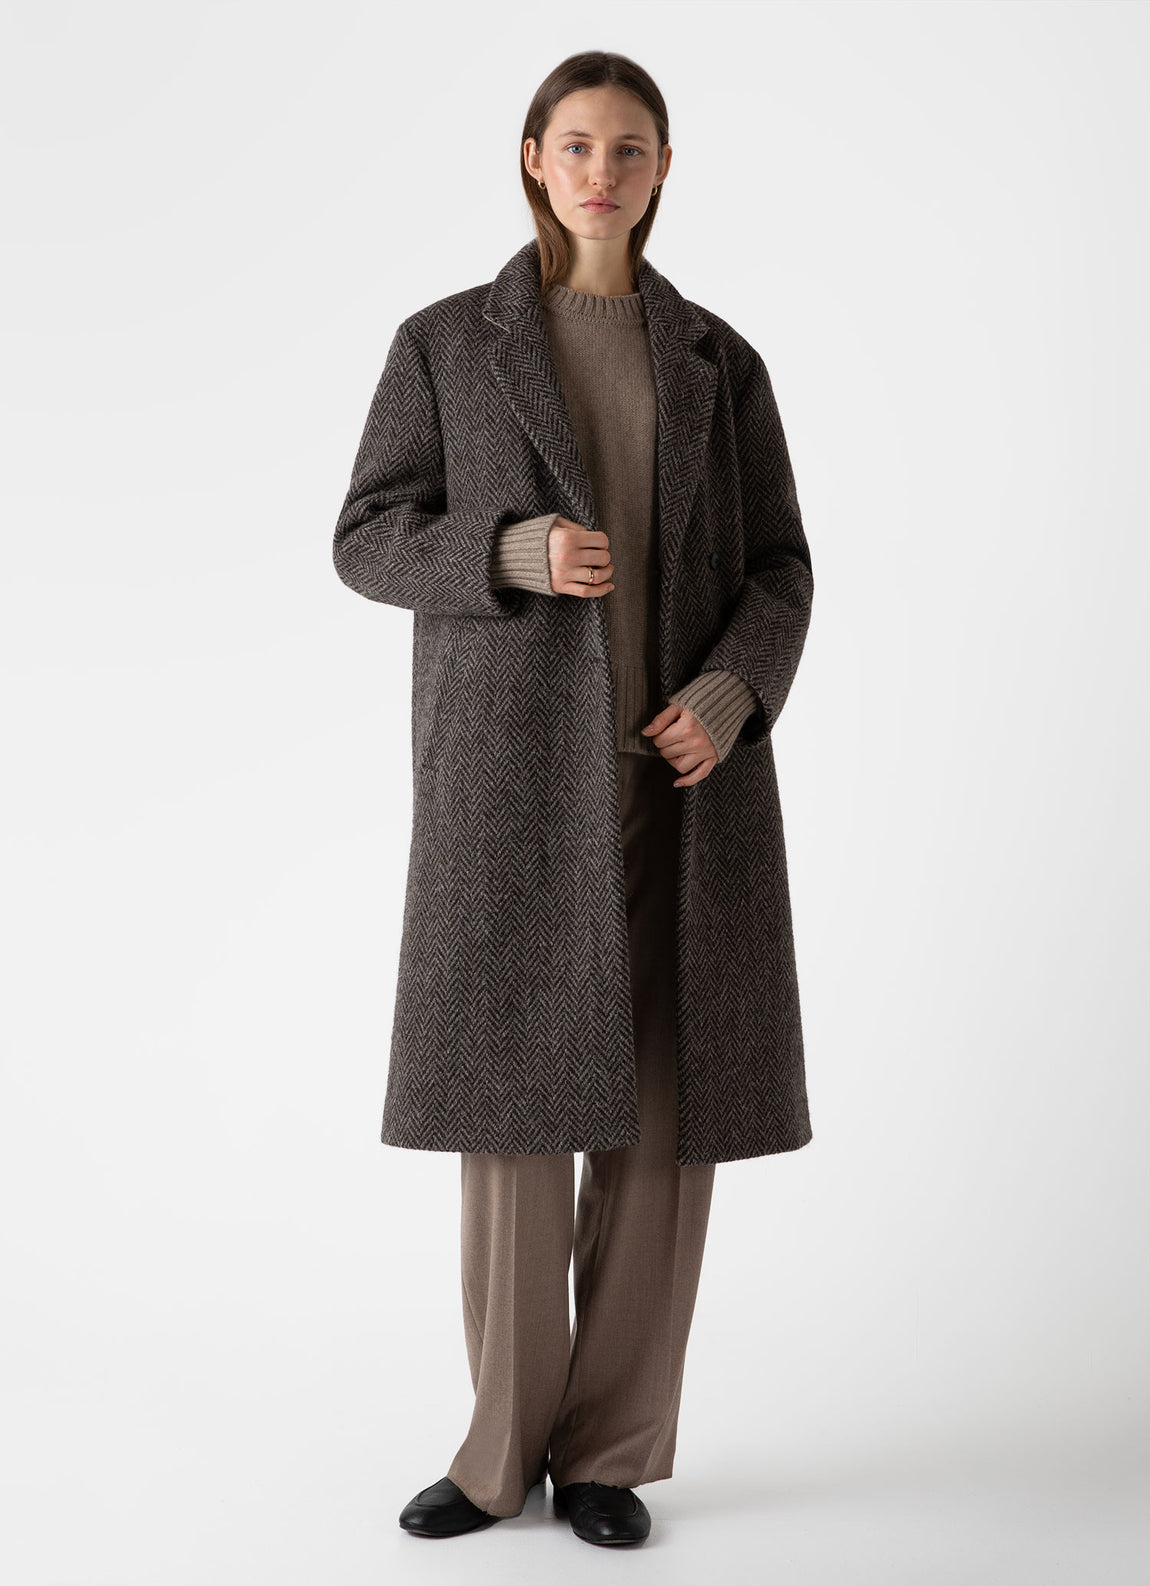 Women's British Wool Coat in Brown Herringbone